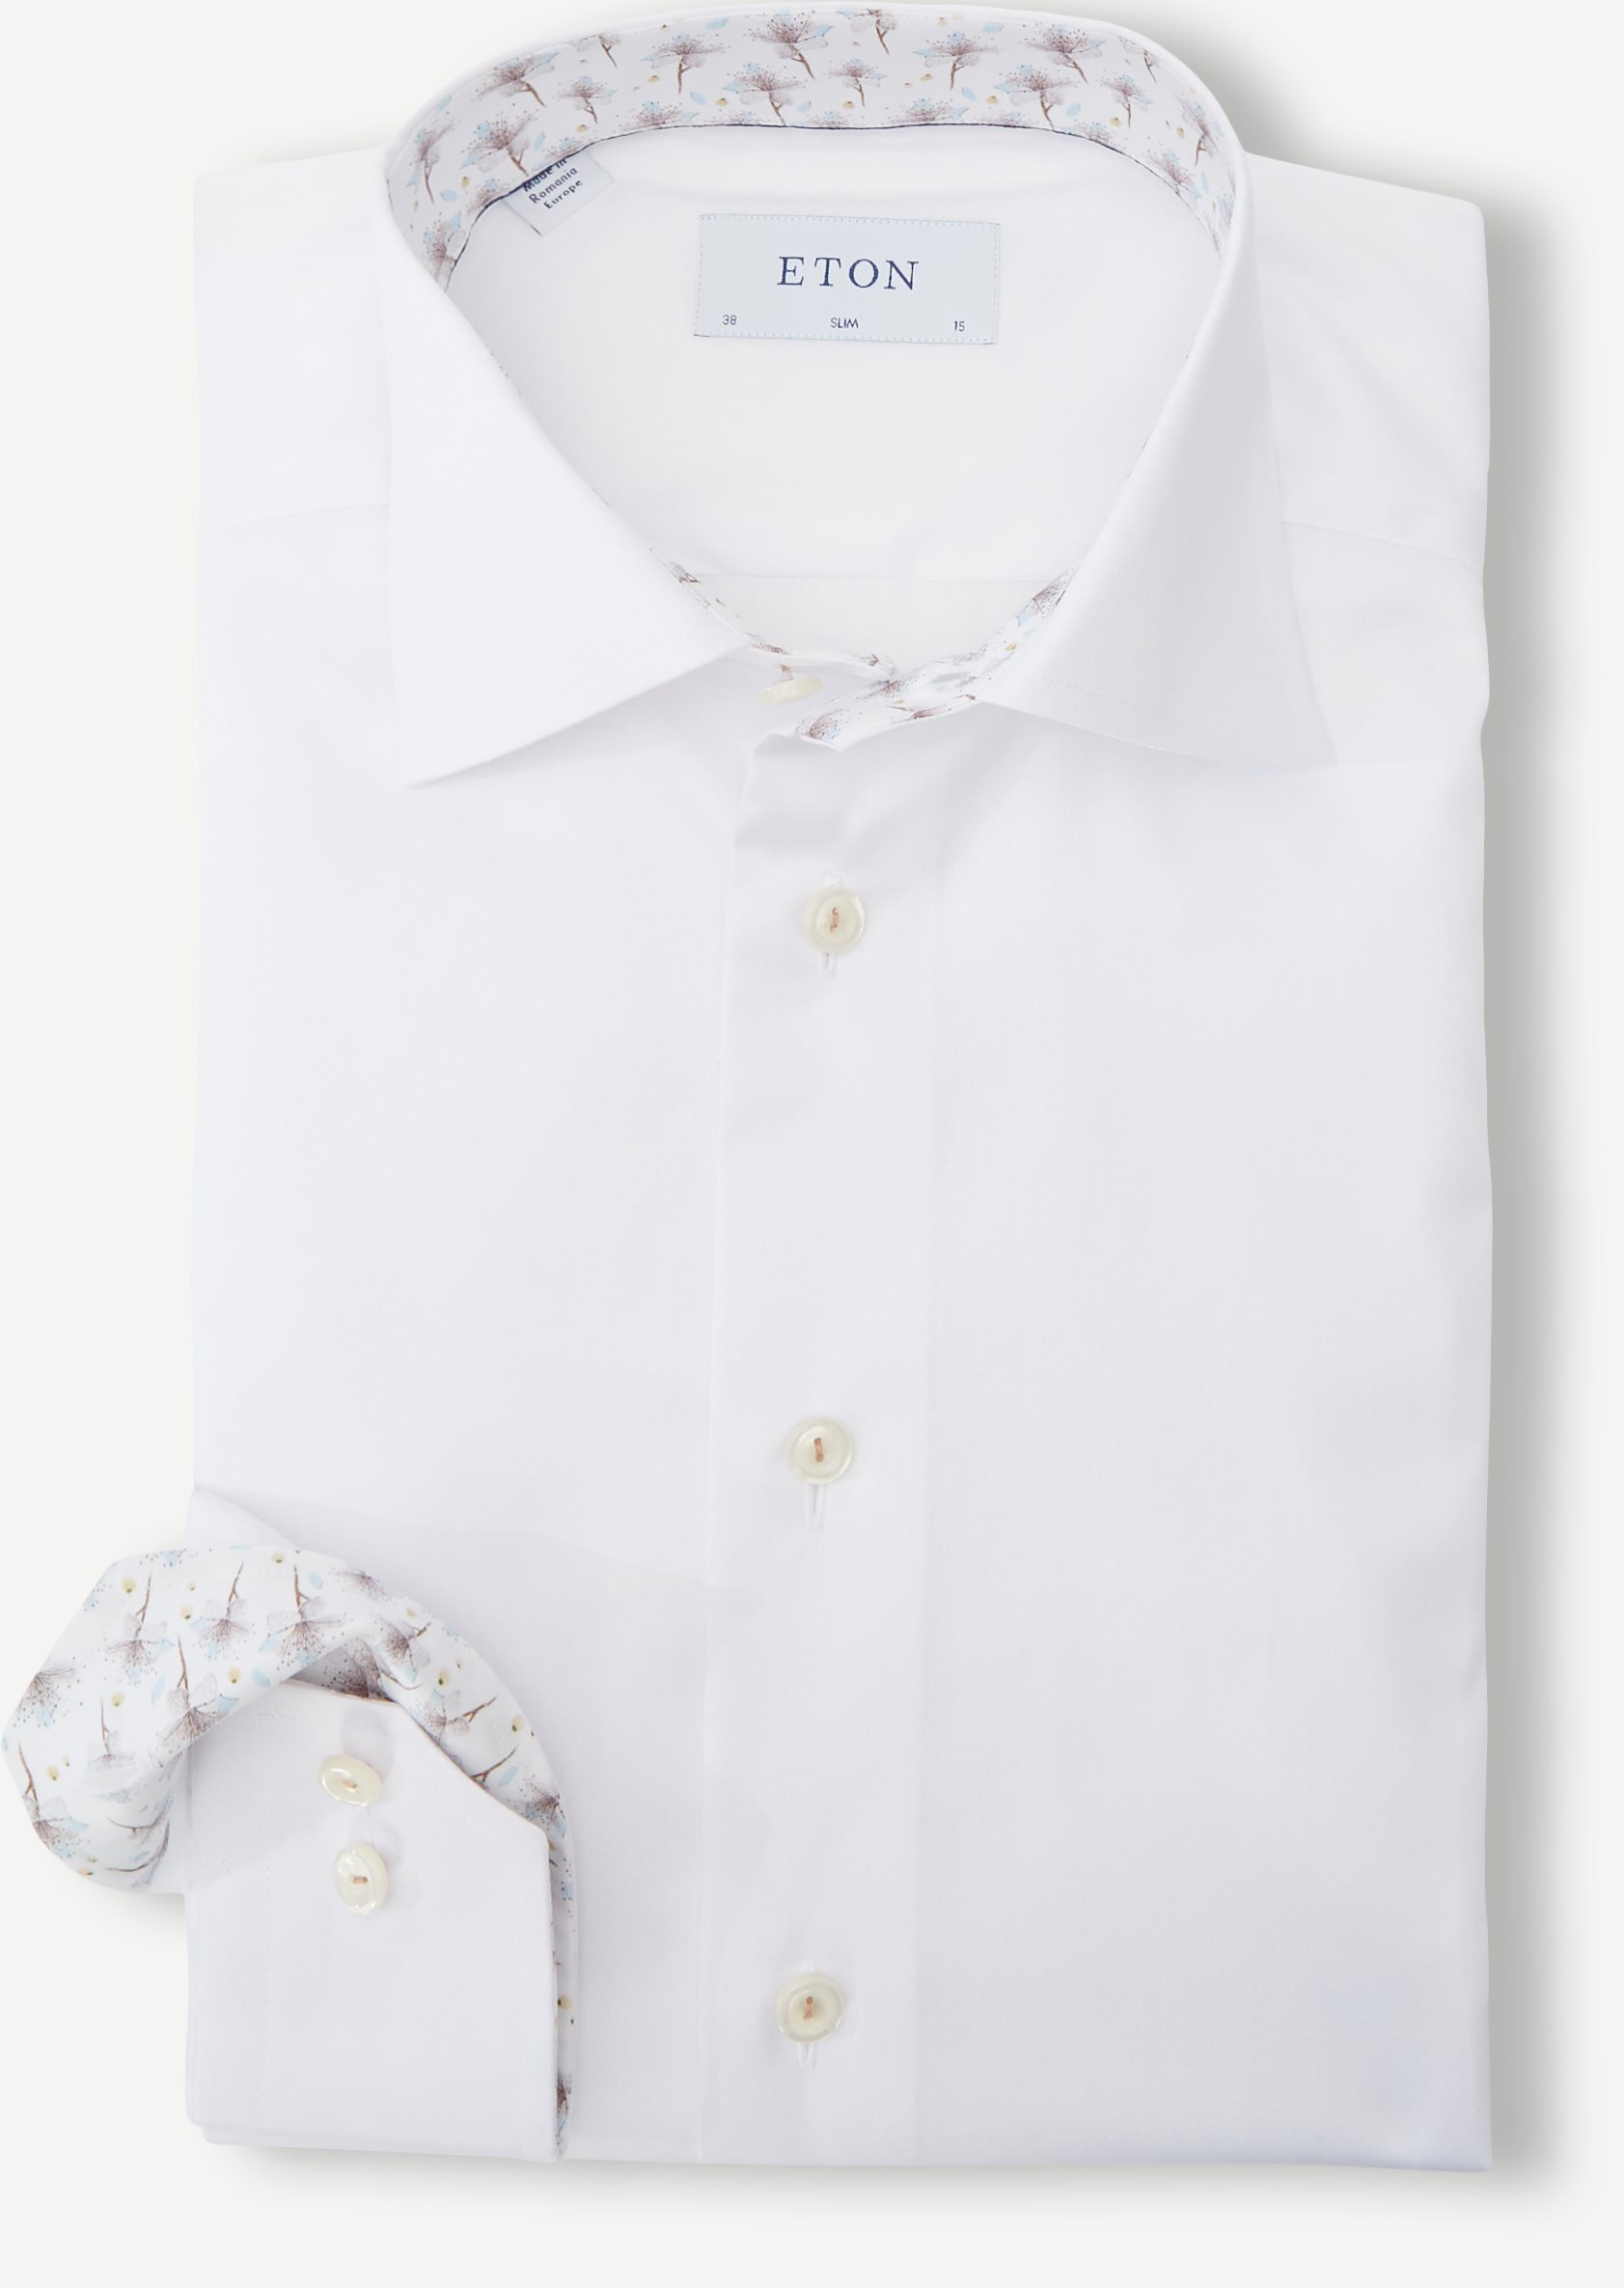 Eton Shirts 3001 79 231-96 White